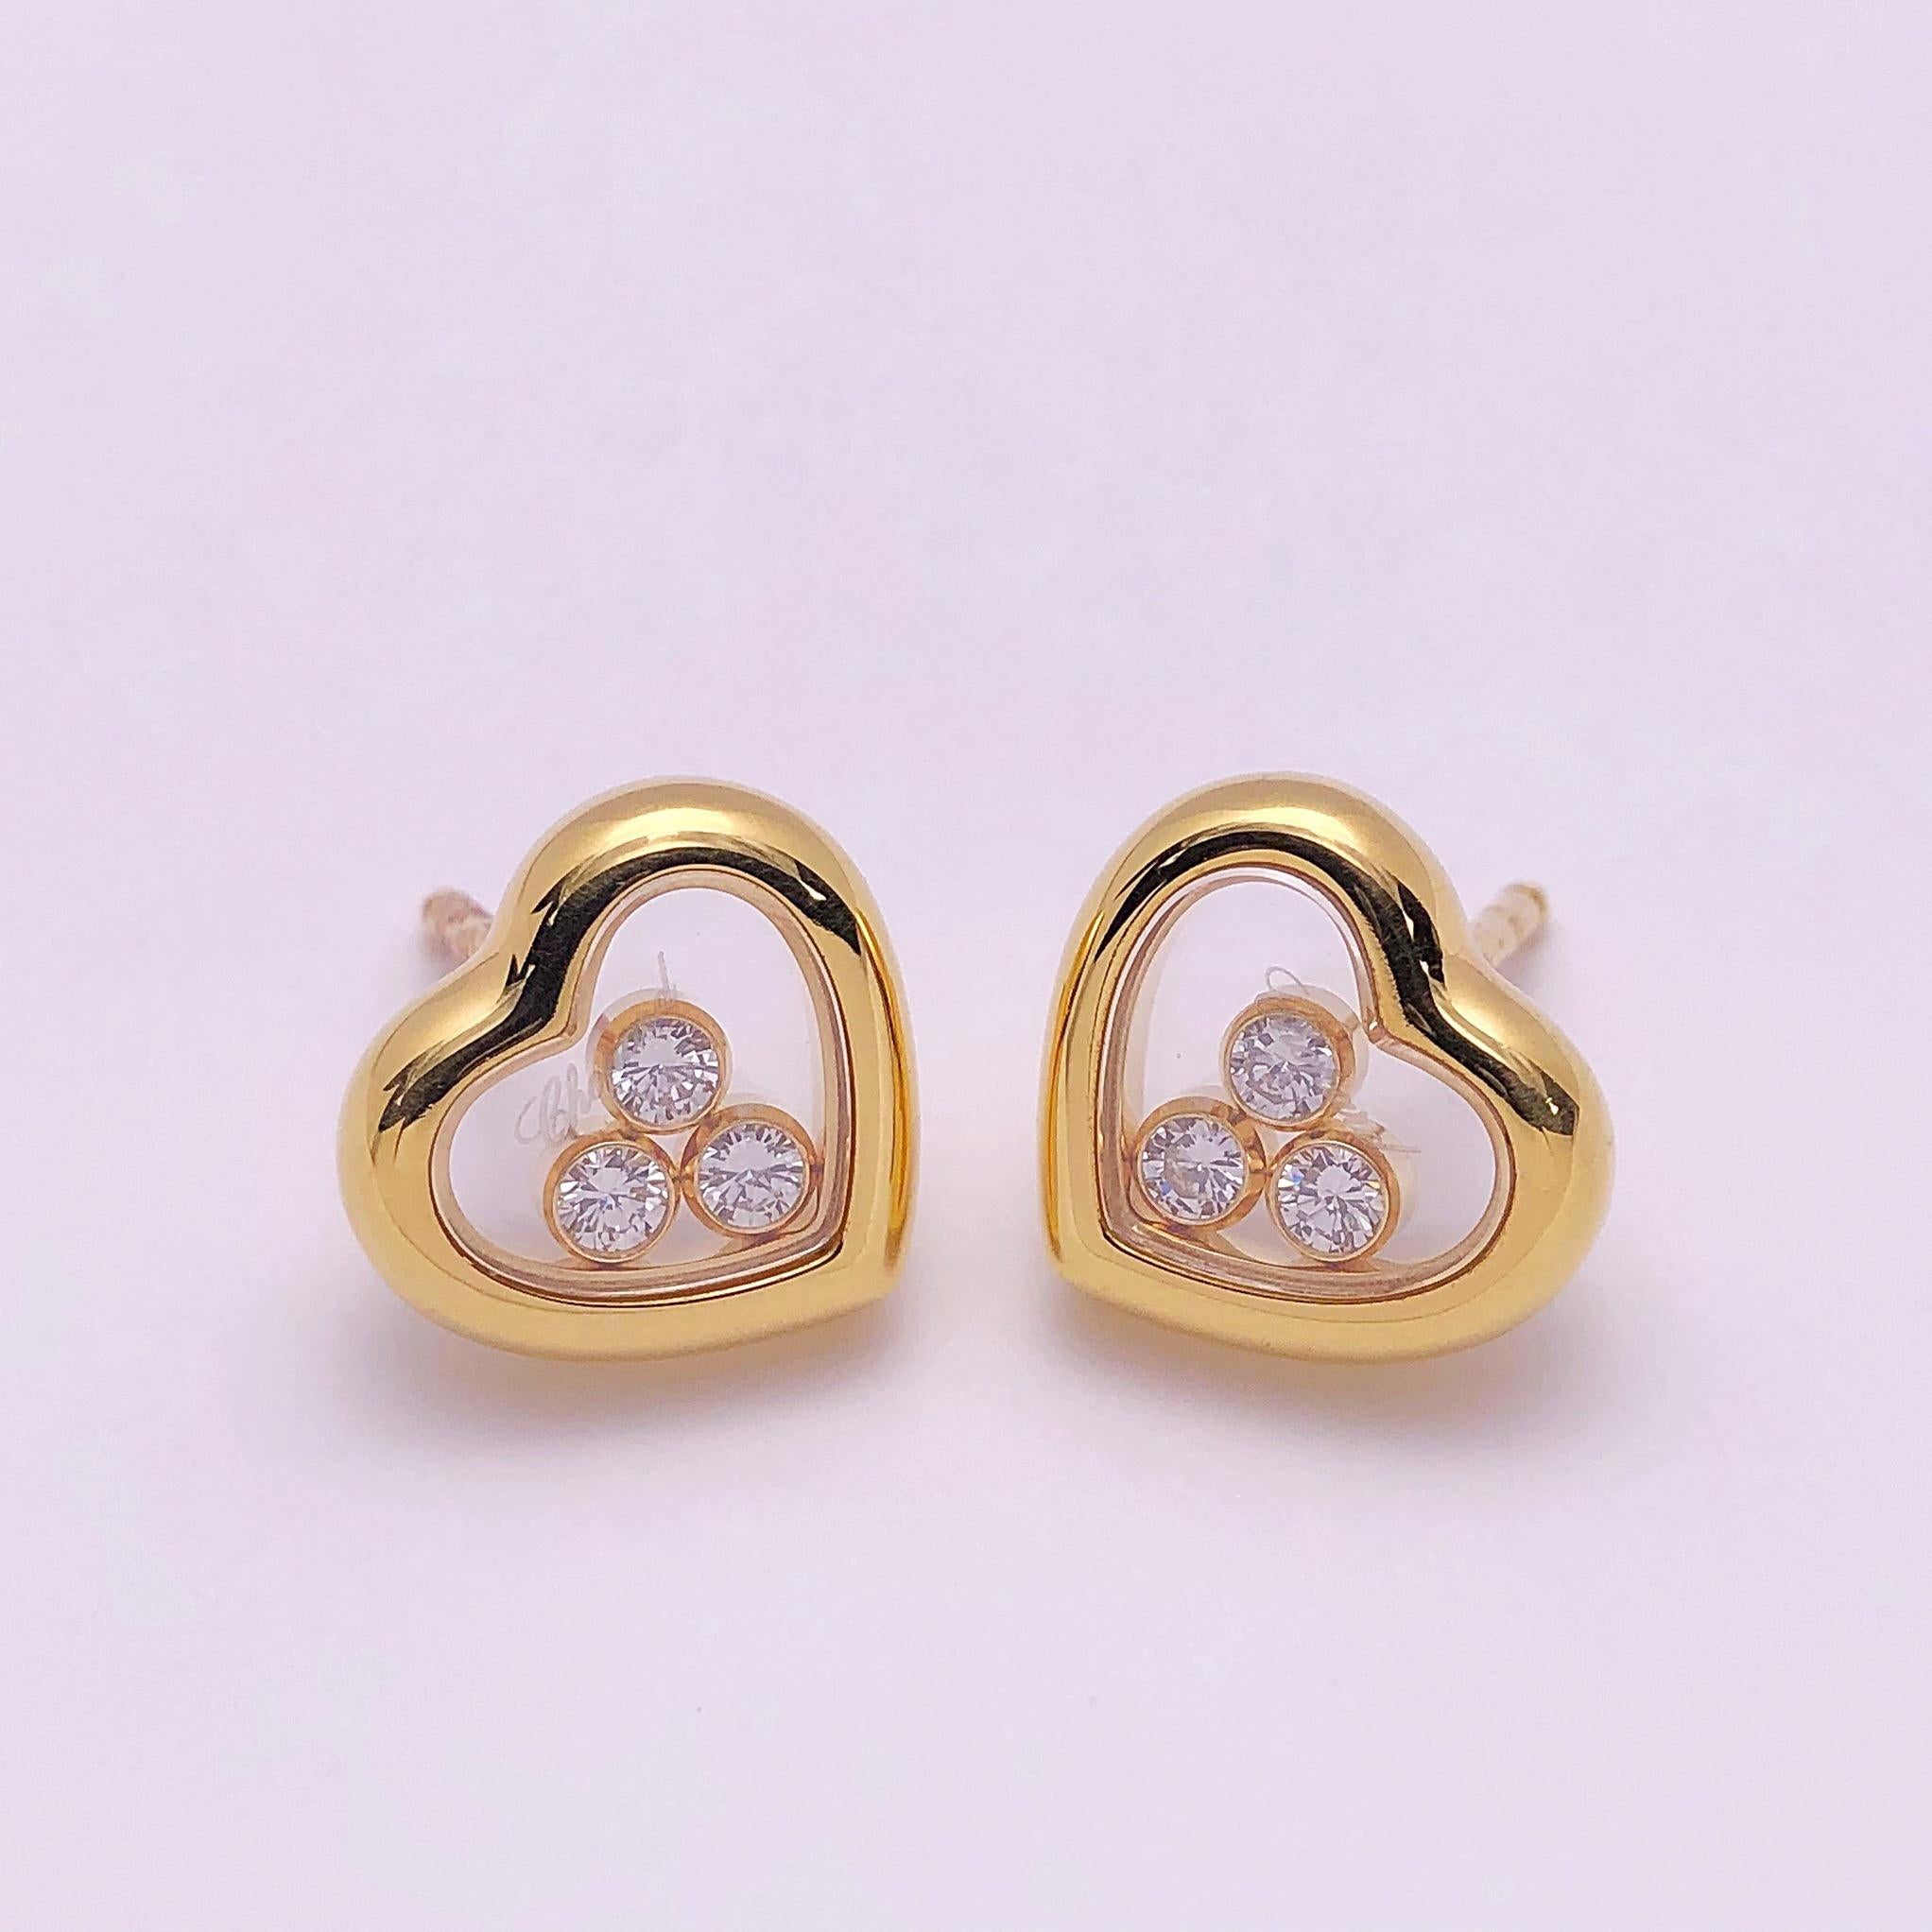 Round Cut Chopard 18 Karat Gold Happy Diamond Heart Earrings with 3 Floating Diamonds